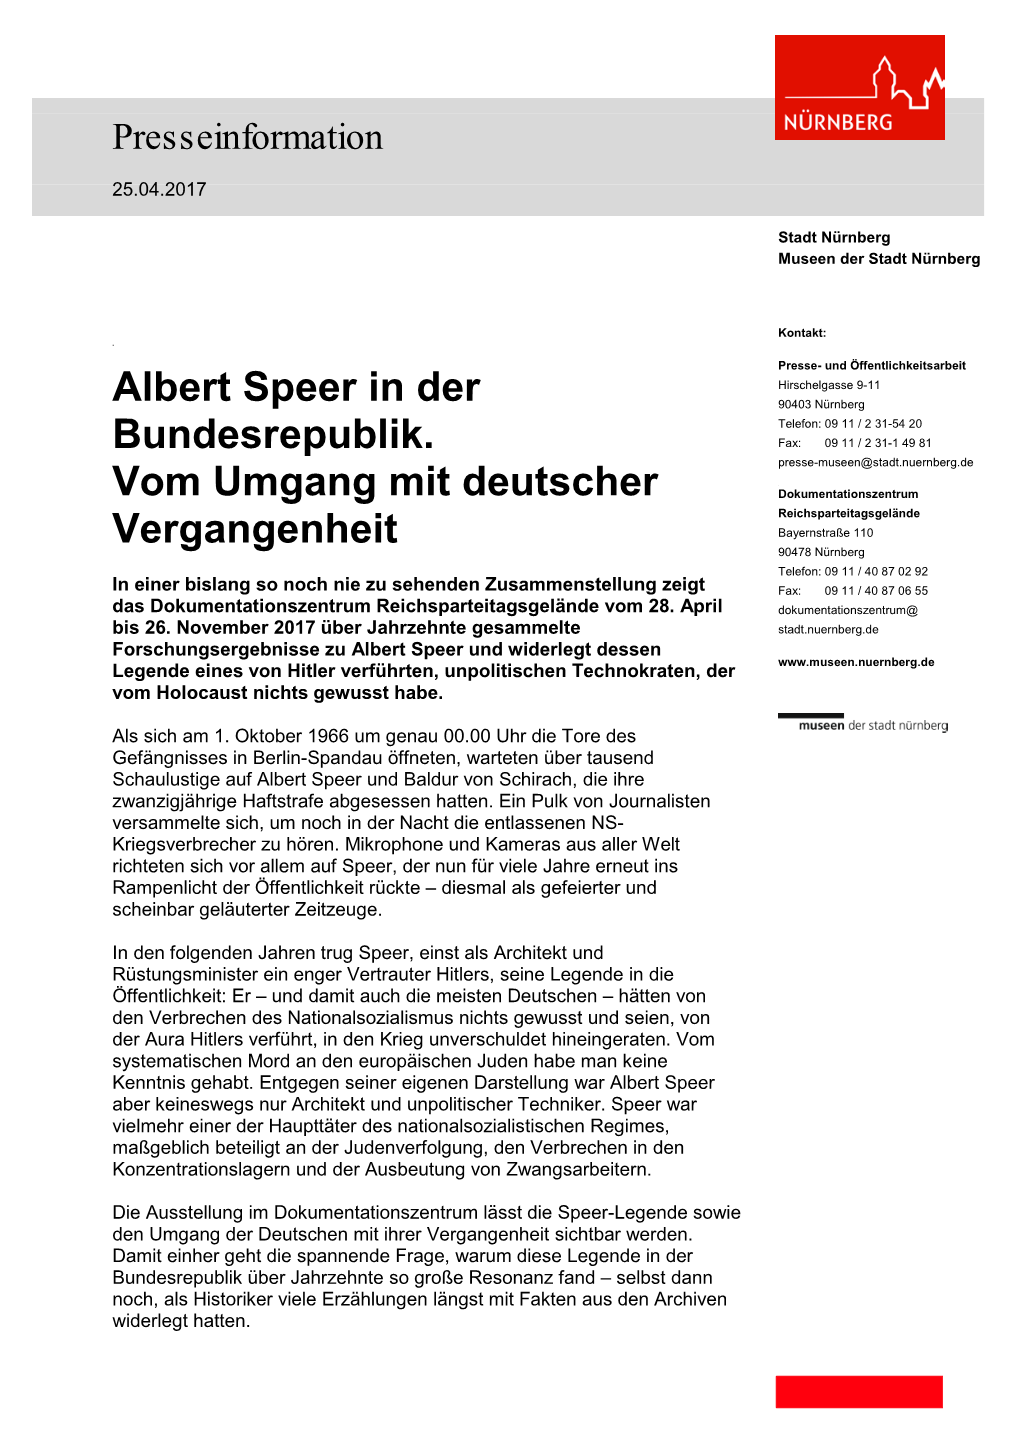 Albert Speer in Der Bundesrepublik